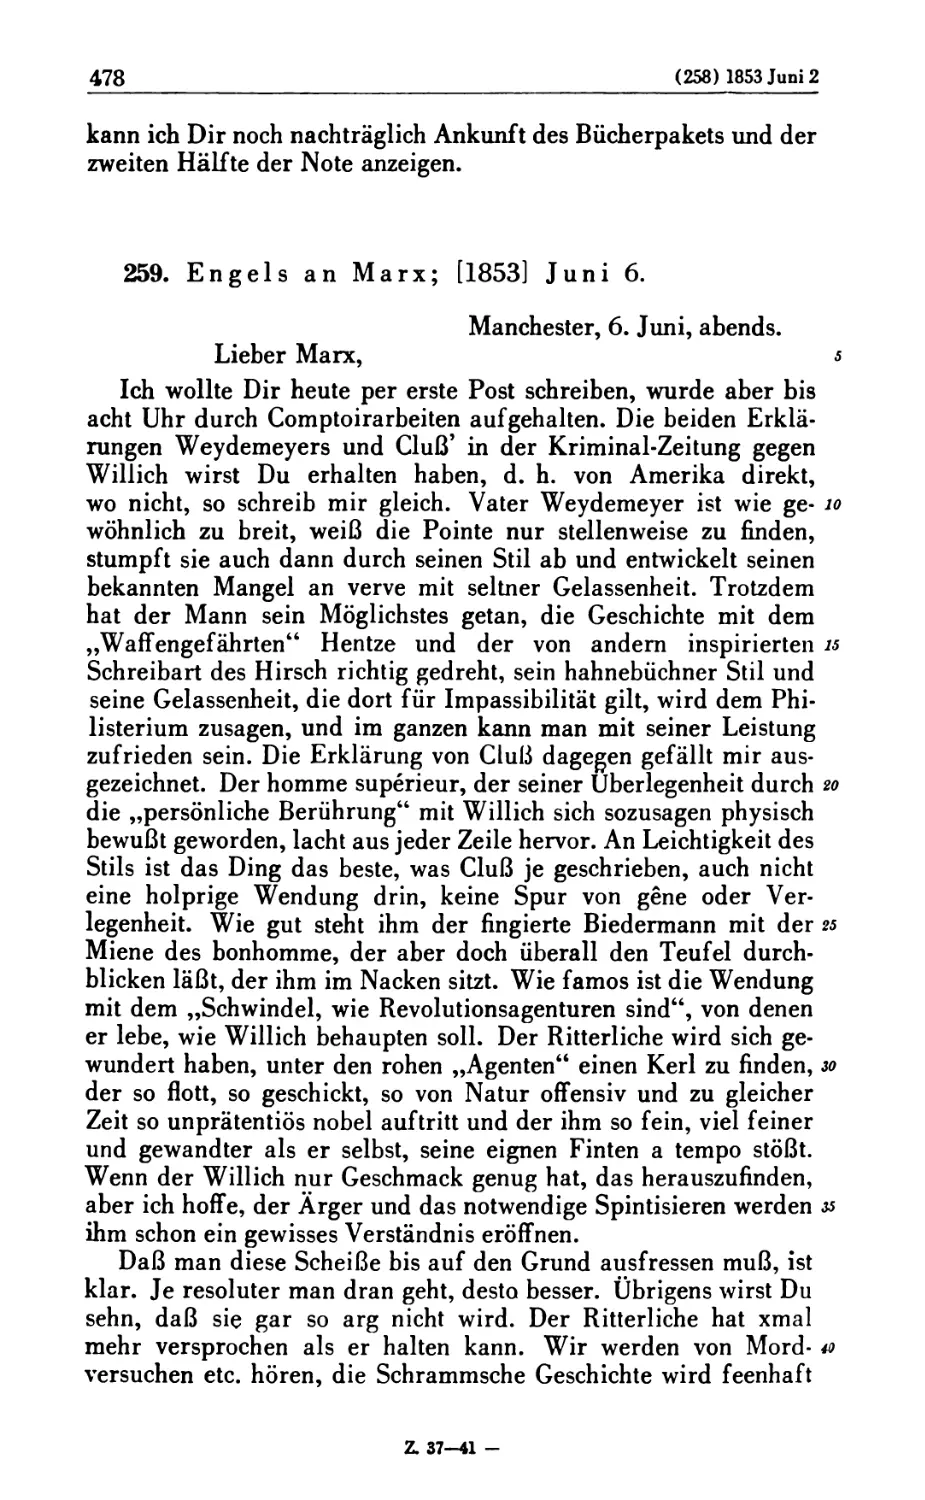 259. Engels an Marx; [1853] Juni 6